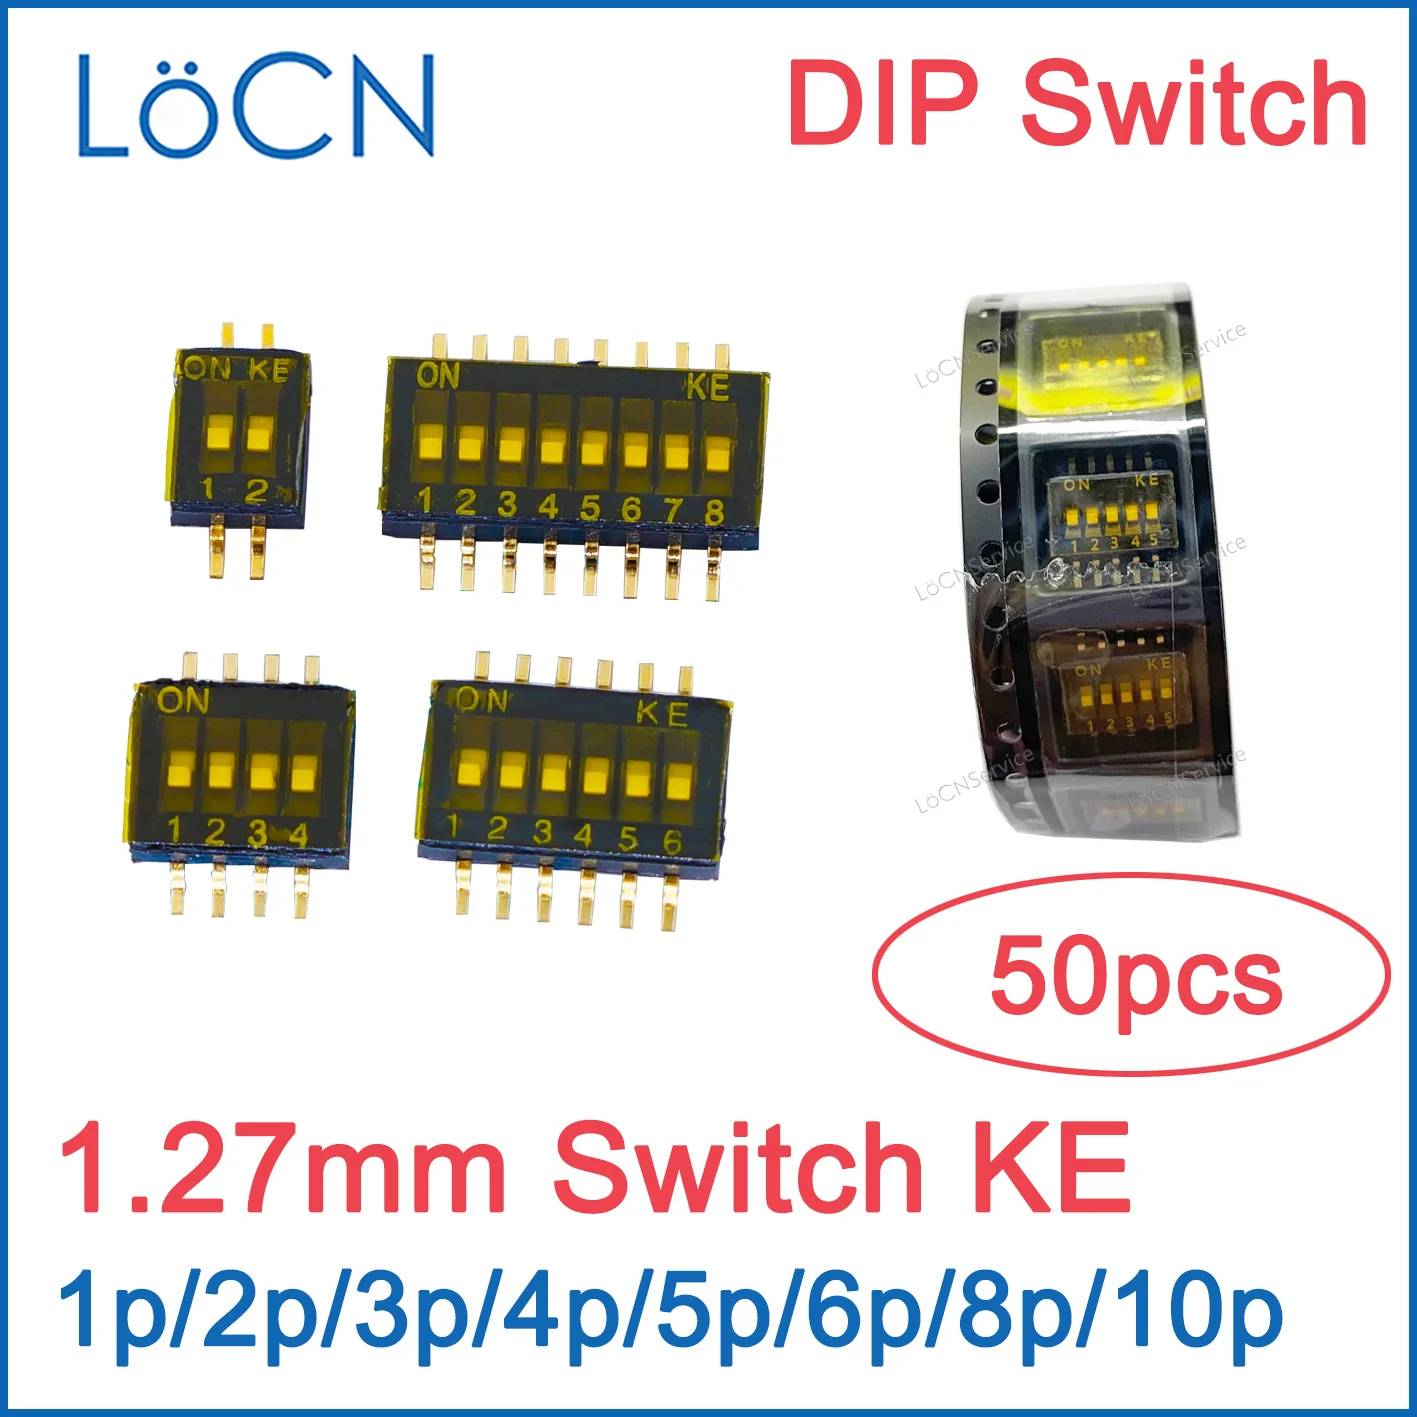 KE 1.27MM DIP SMD Switch Slide Type 1 2 3 4 5 6 8 10p pin 1.27 Pitch Toggle snap black golden switch LoCN 50pcs